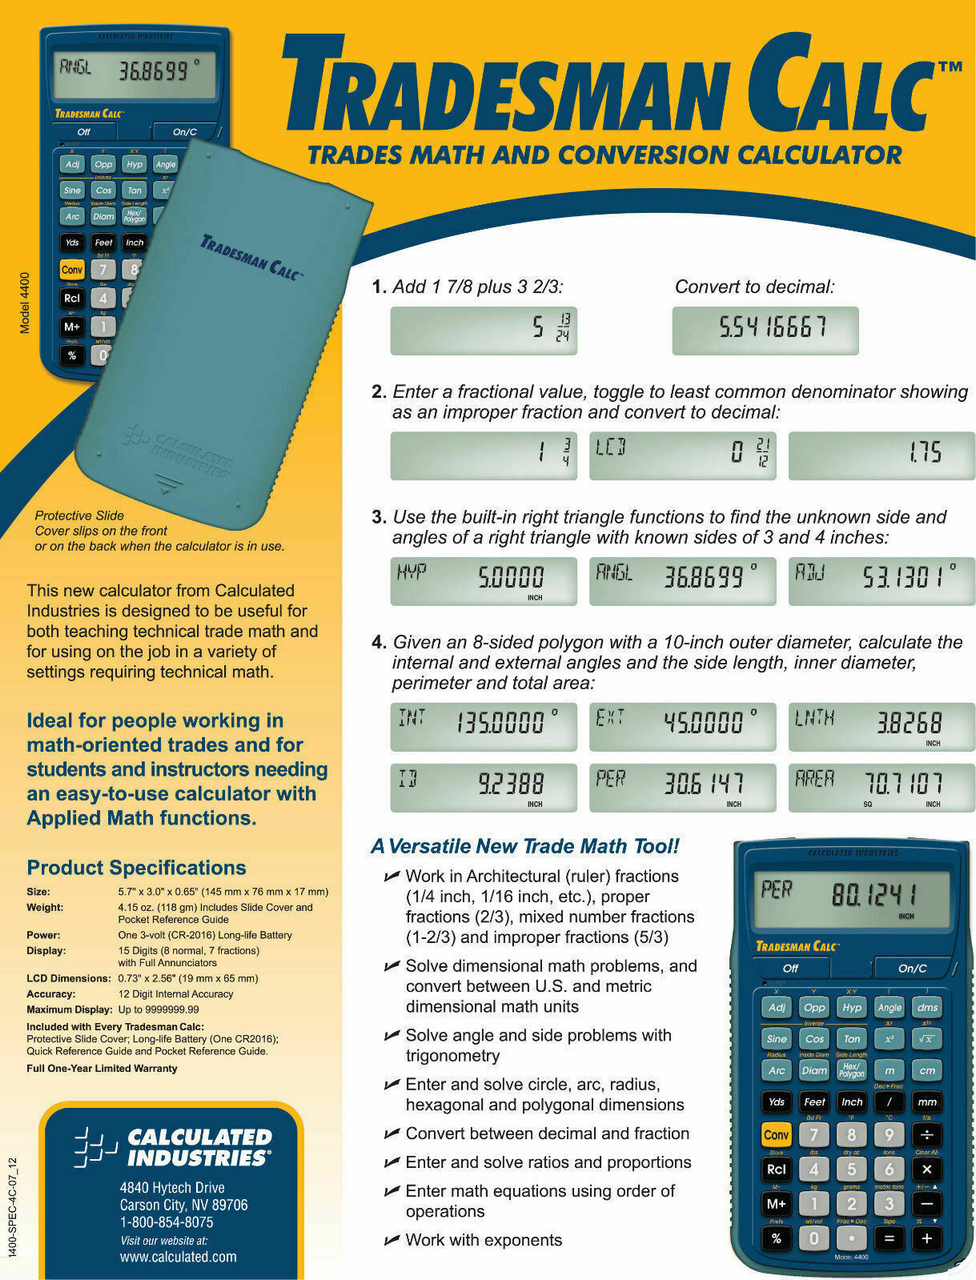 Calculated Industries Tradesman Calculator 4400